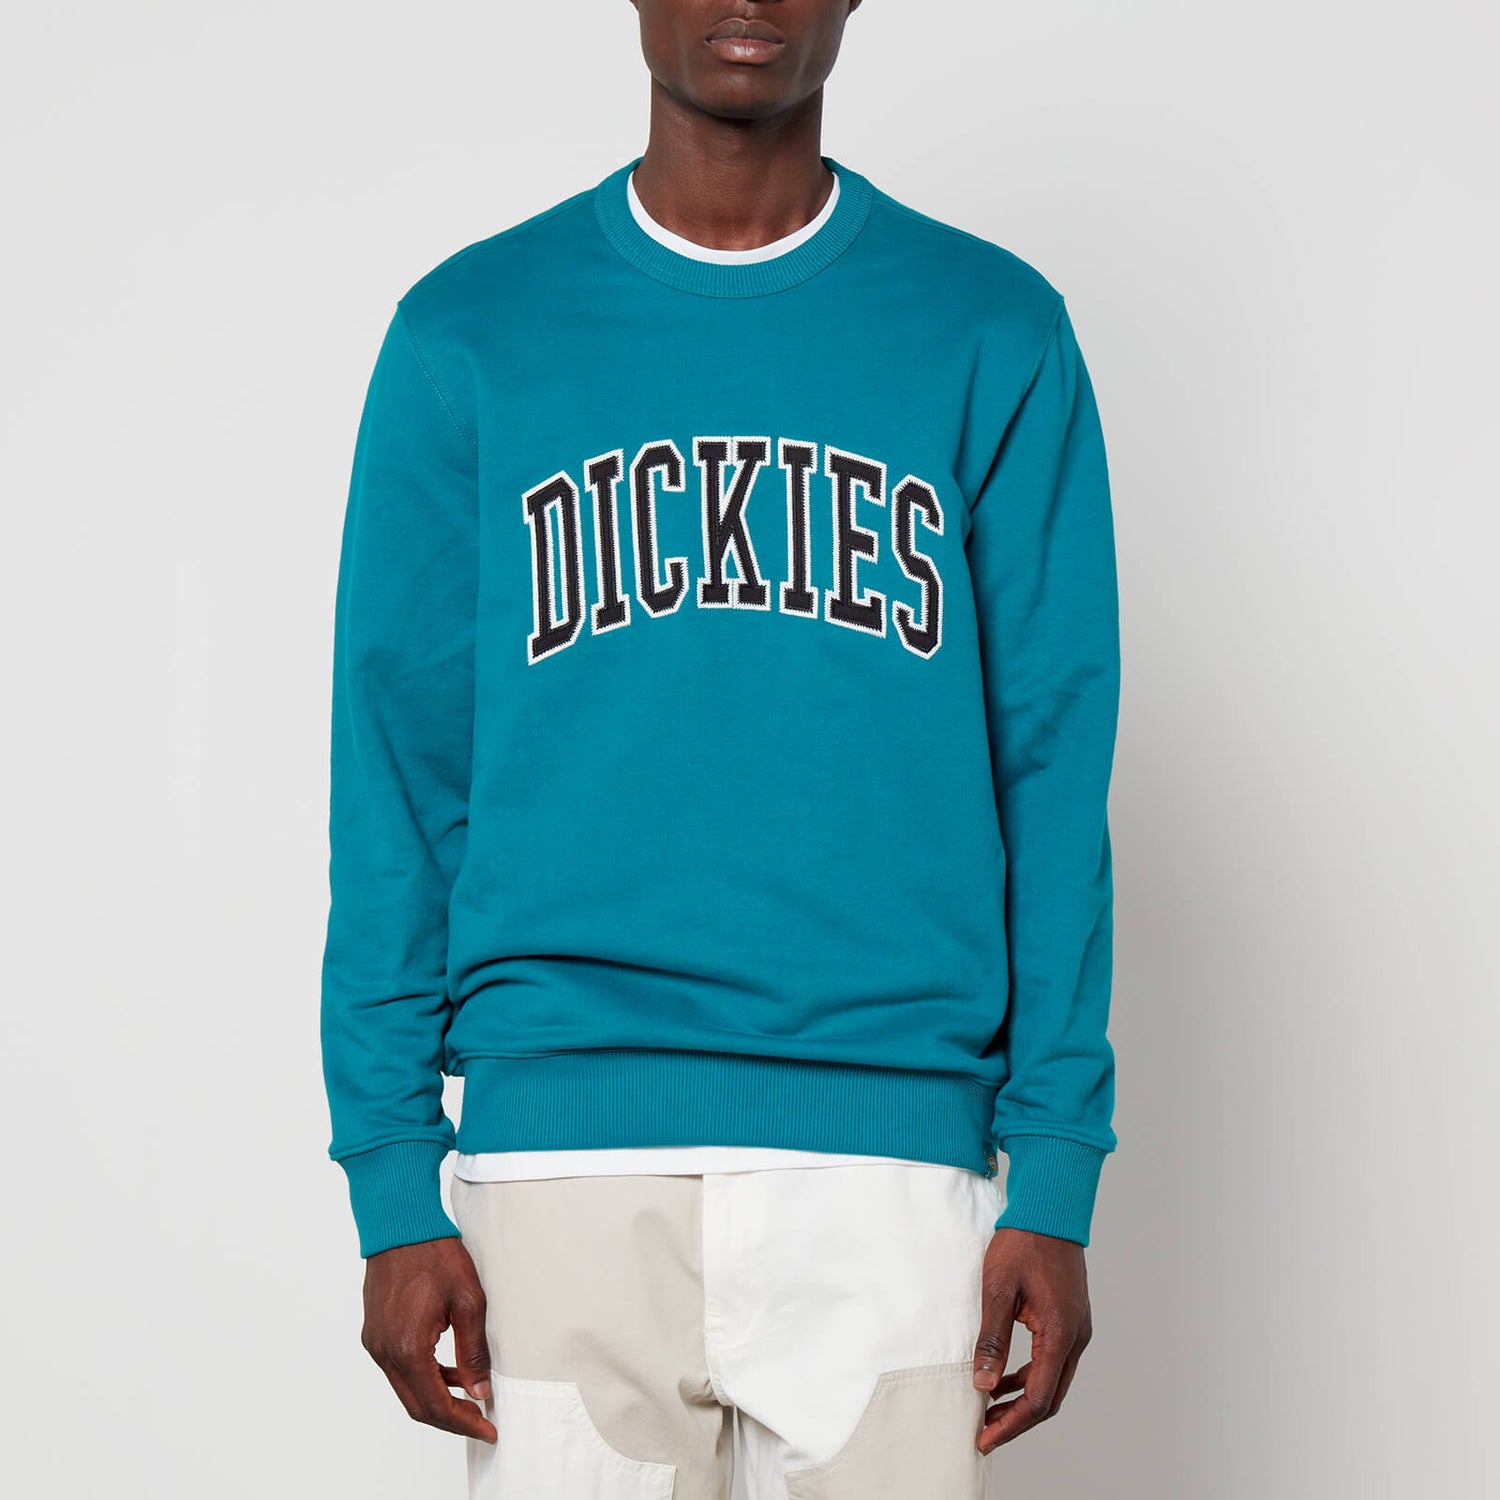 Dickies Aitkin Cotton-Jersey Appliqued Logo Sweatshirt - S